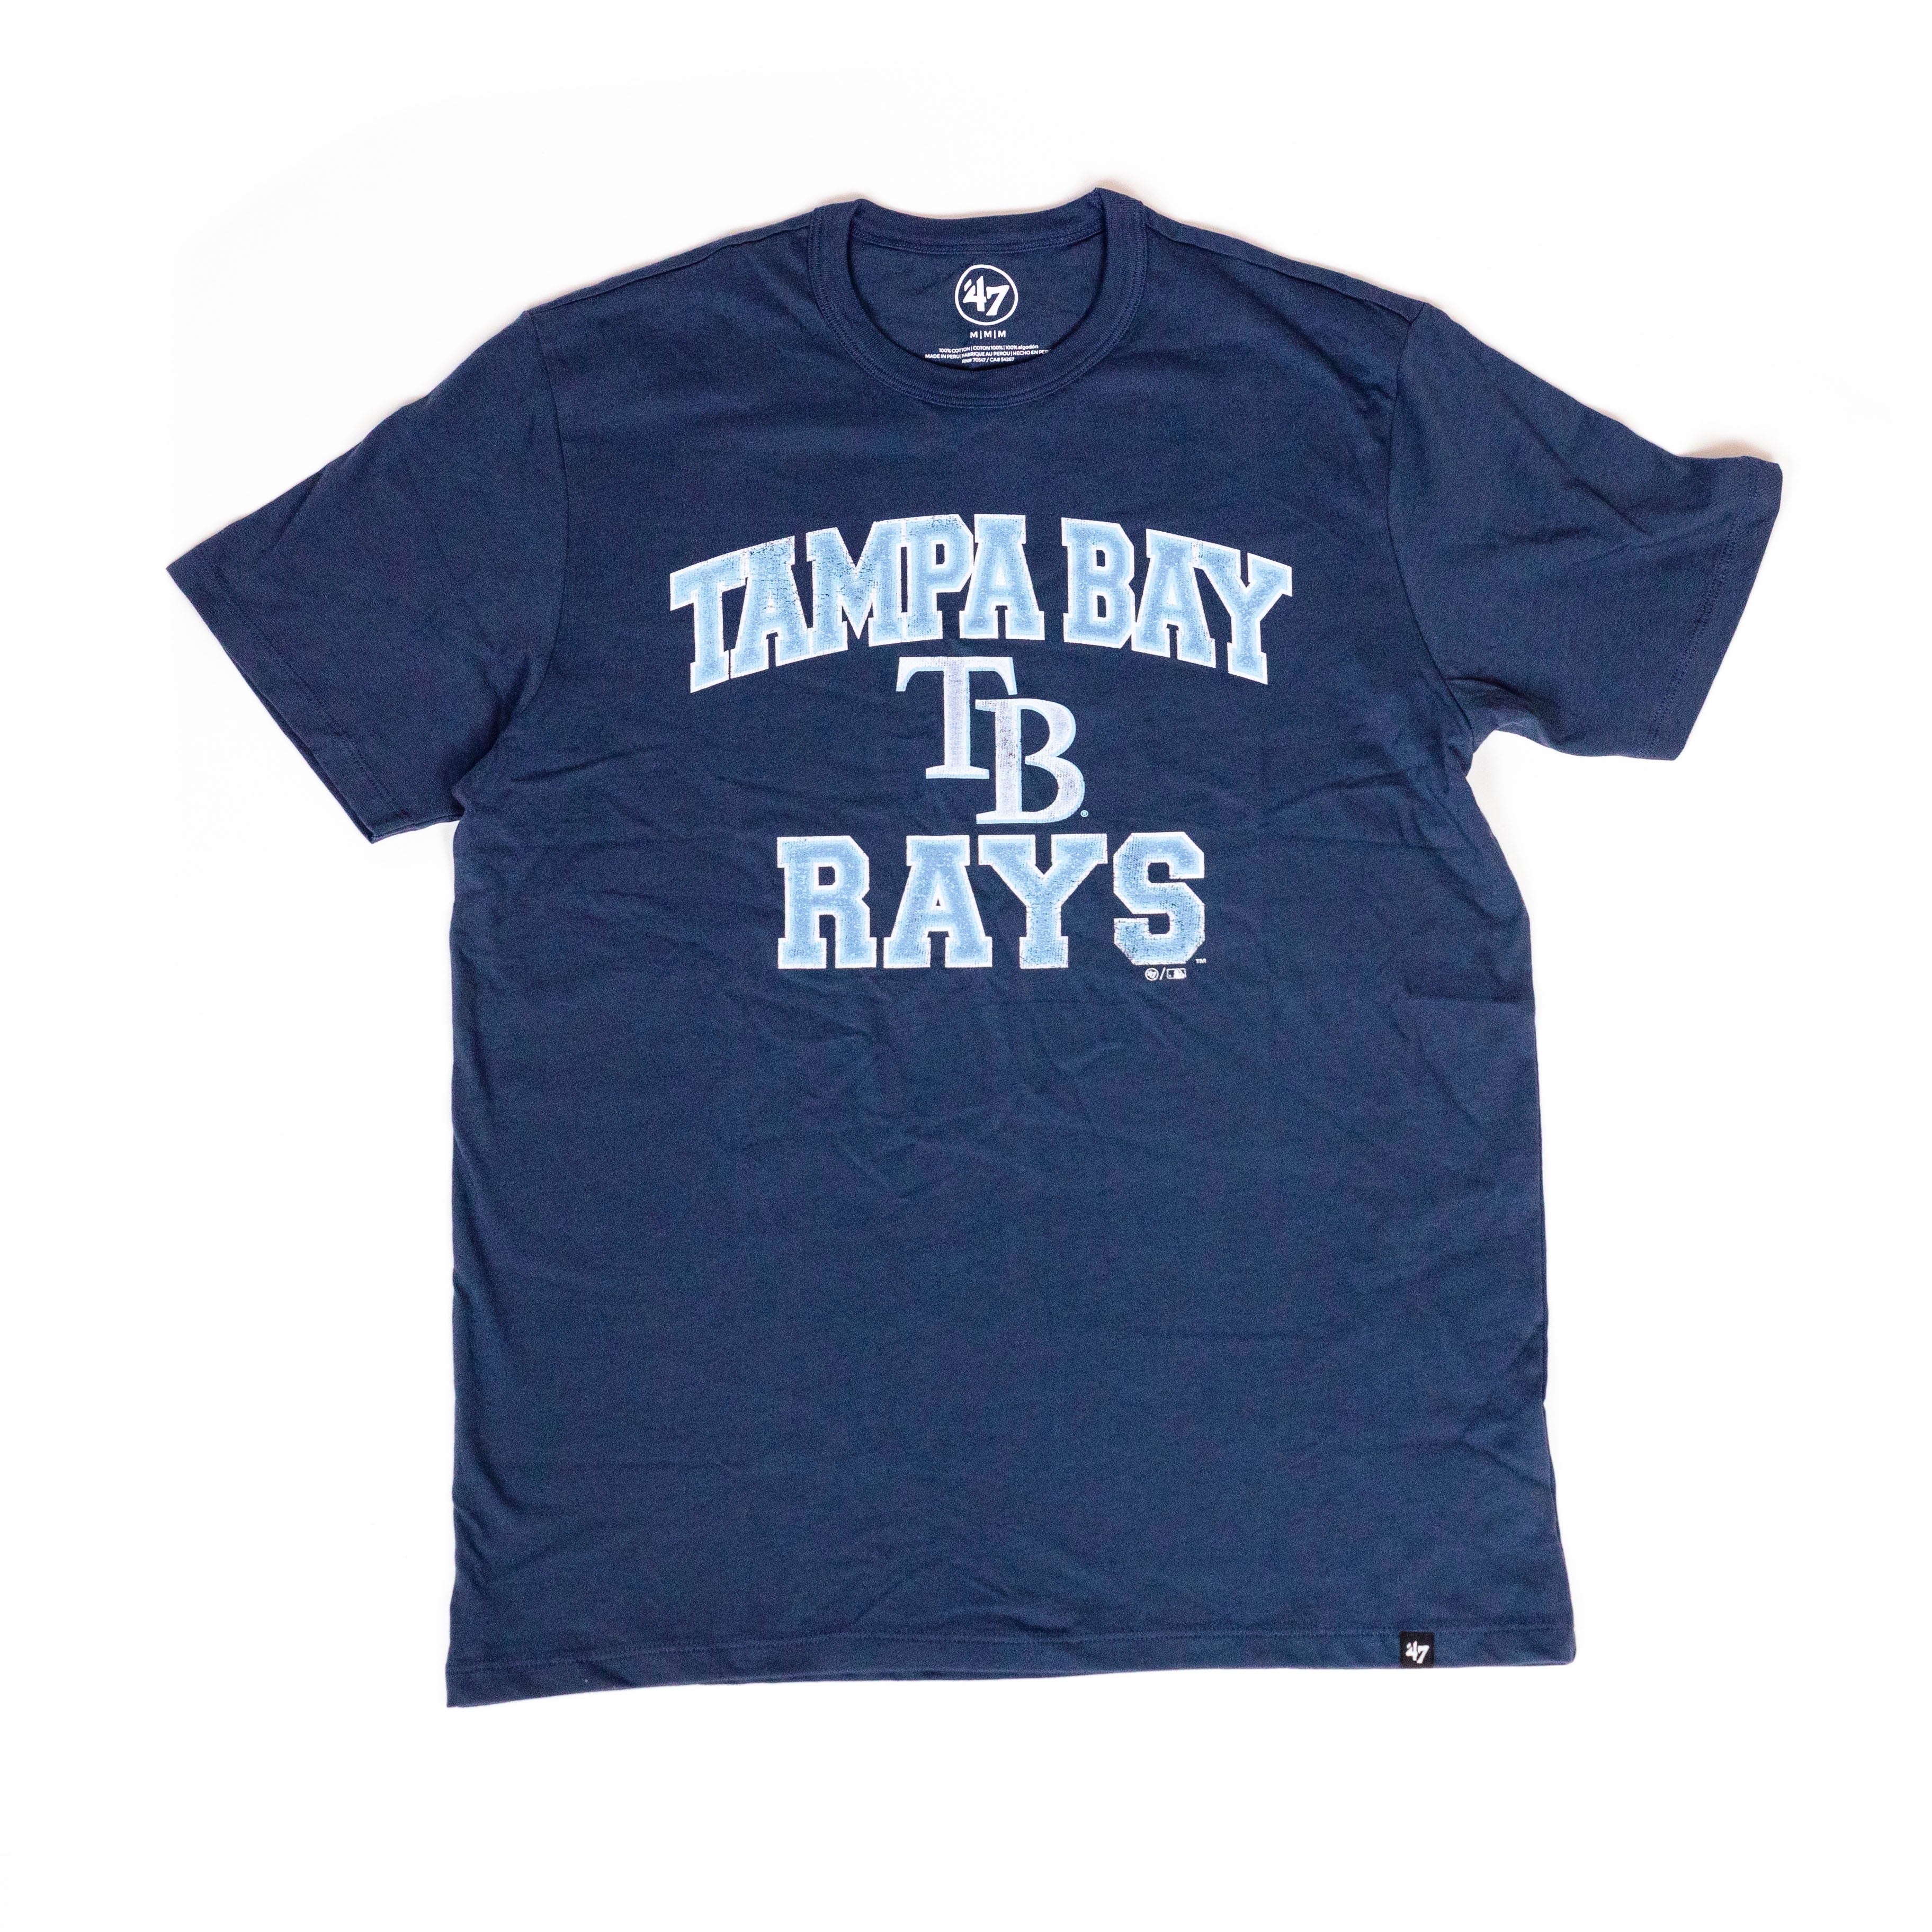 Rays T-Shirt, Tampa Bay Rays Shirt